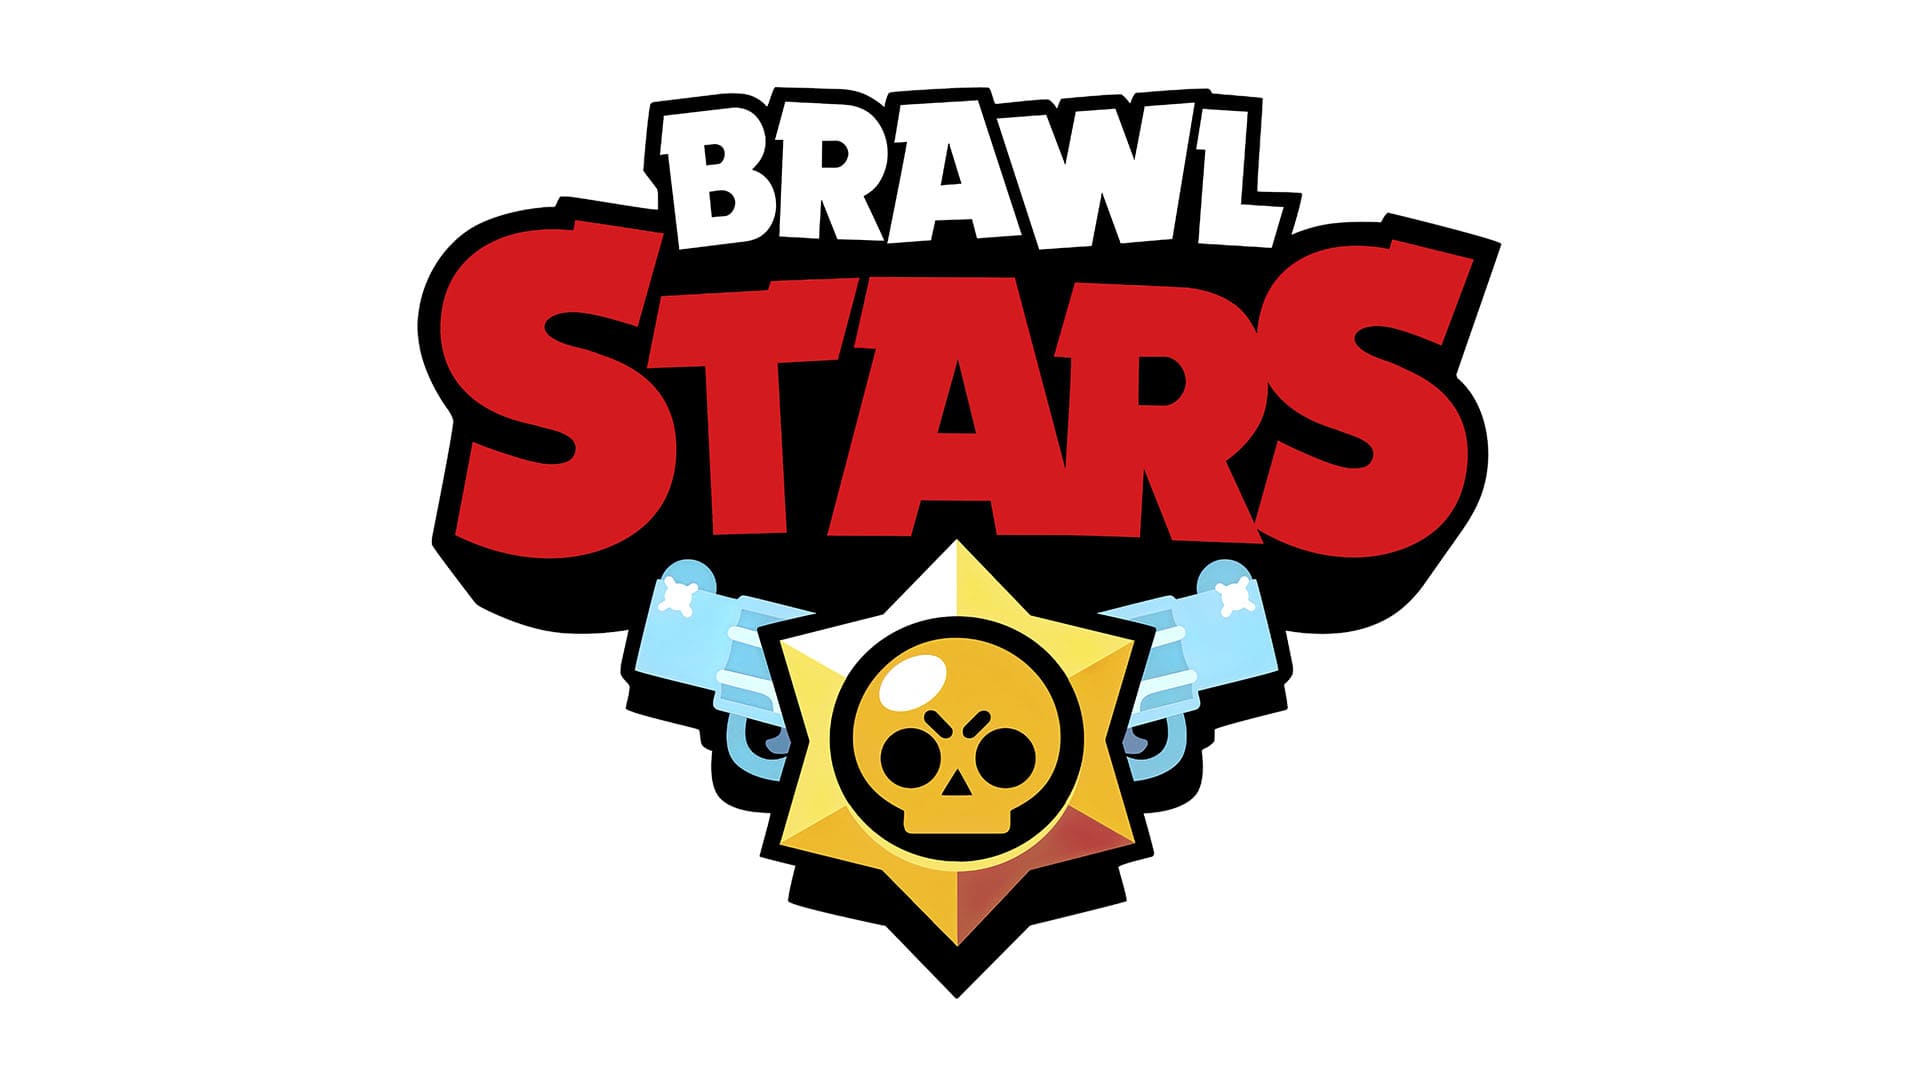 Гас бравал старс. Brawl Stars логотип. Логотип бравлс старс. Brawl Stars nadpis. Логотип Brawl Stars на прозрачном фоне.